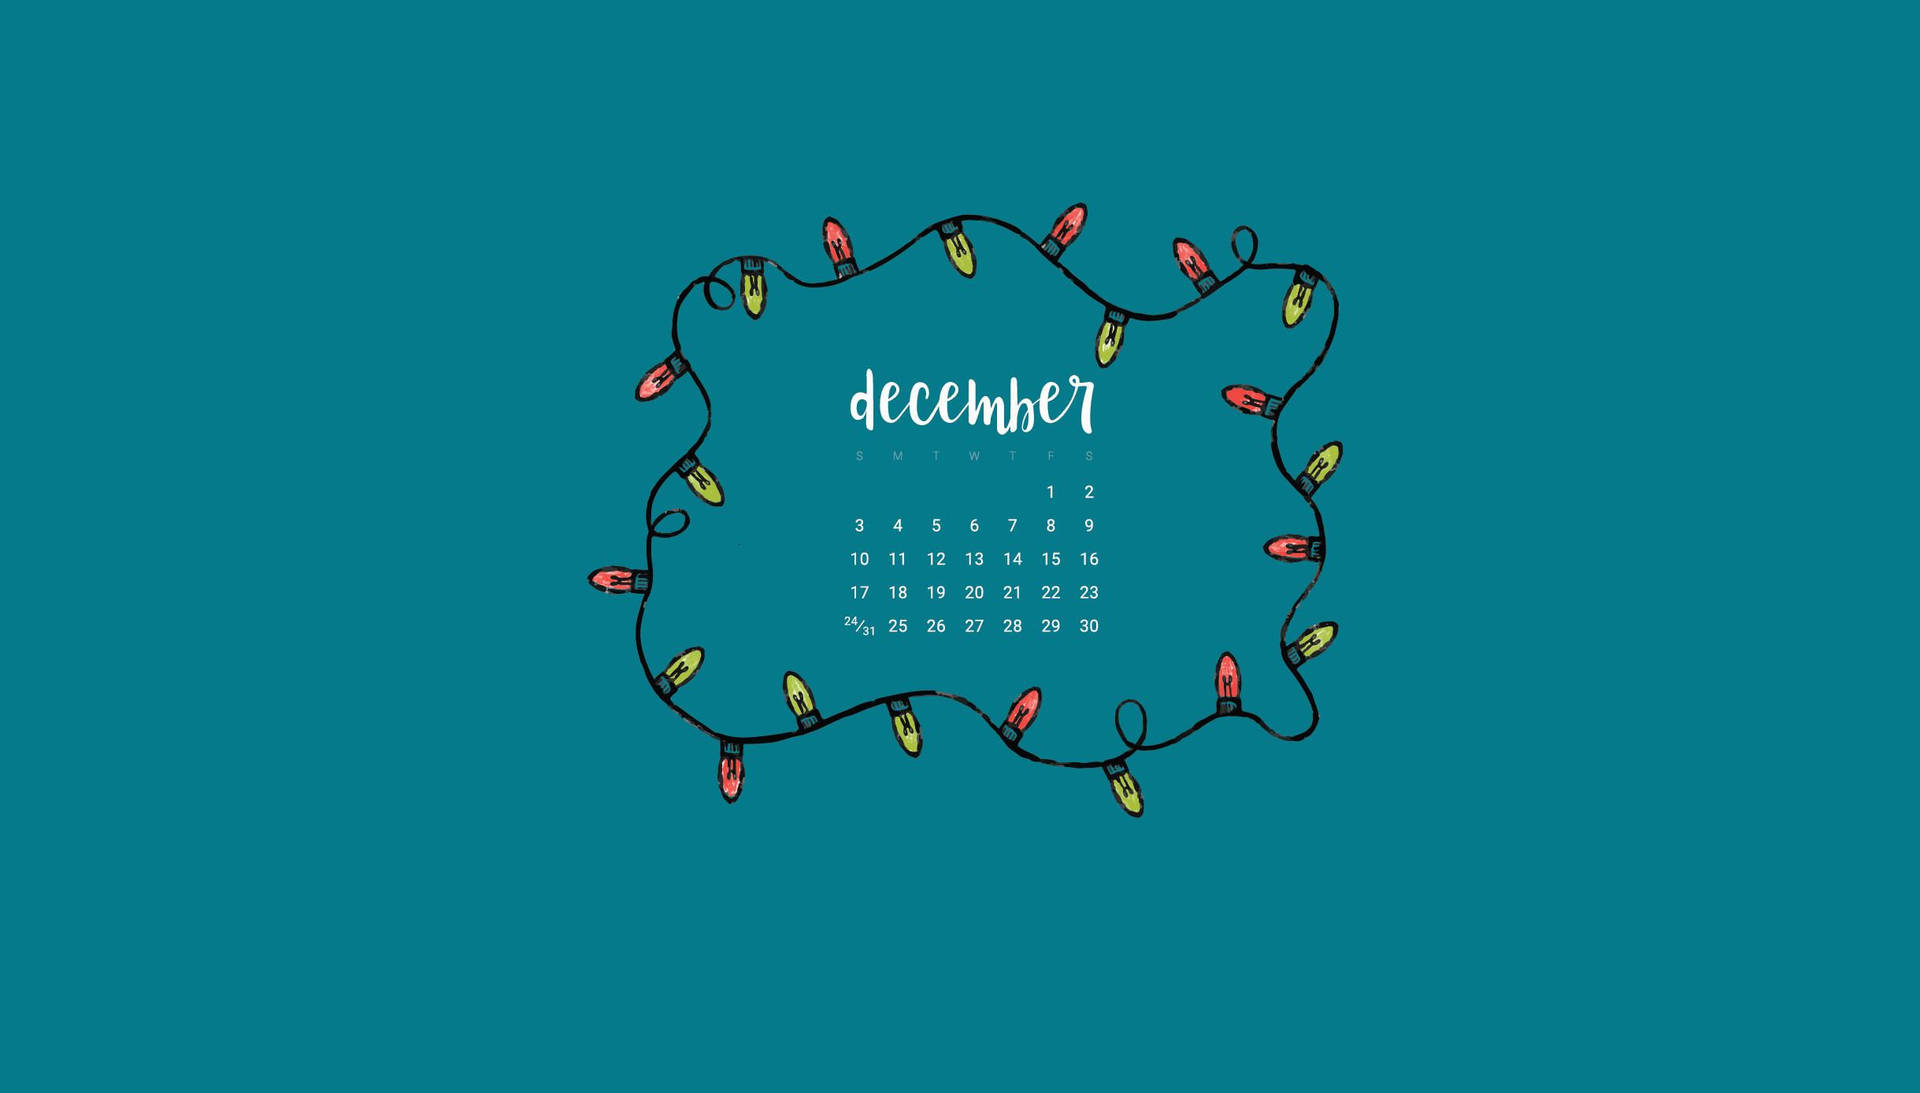 Merry Christmas December Calendar Aesthetic Teal Background